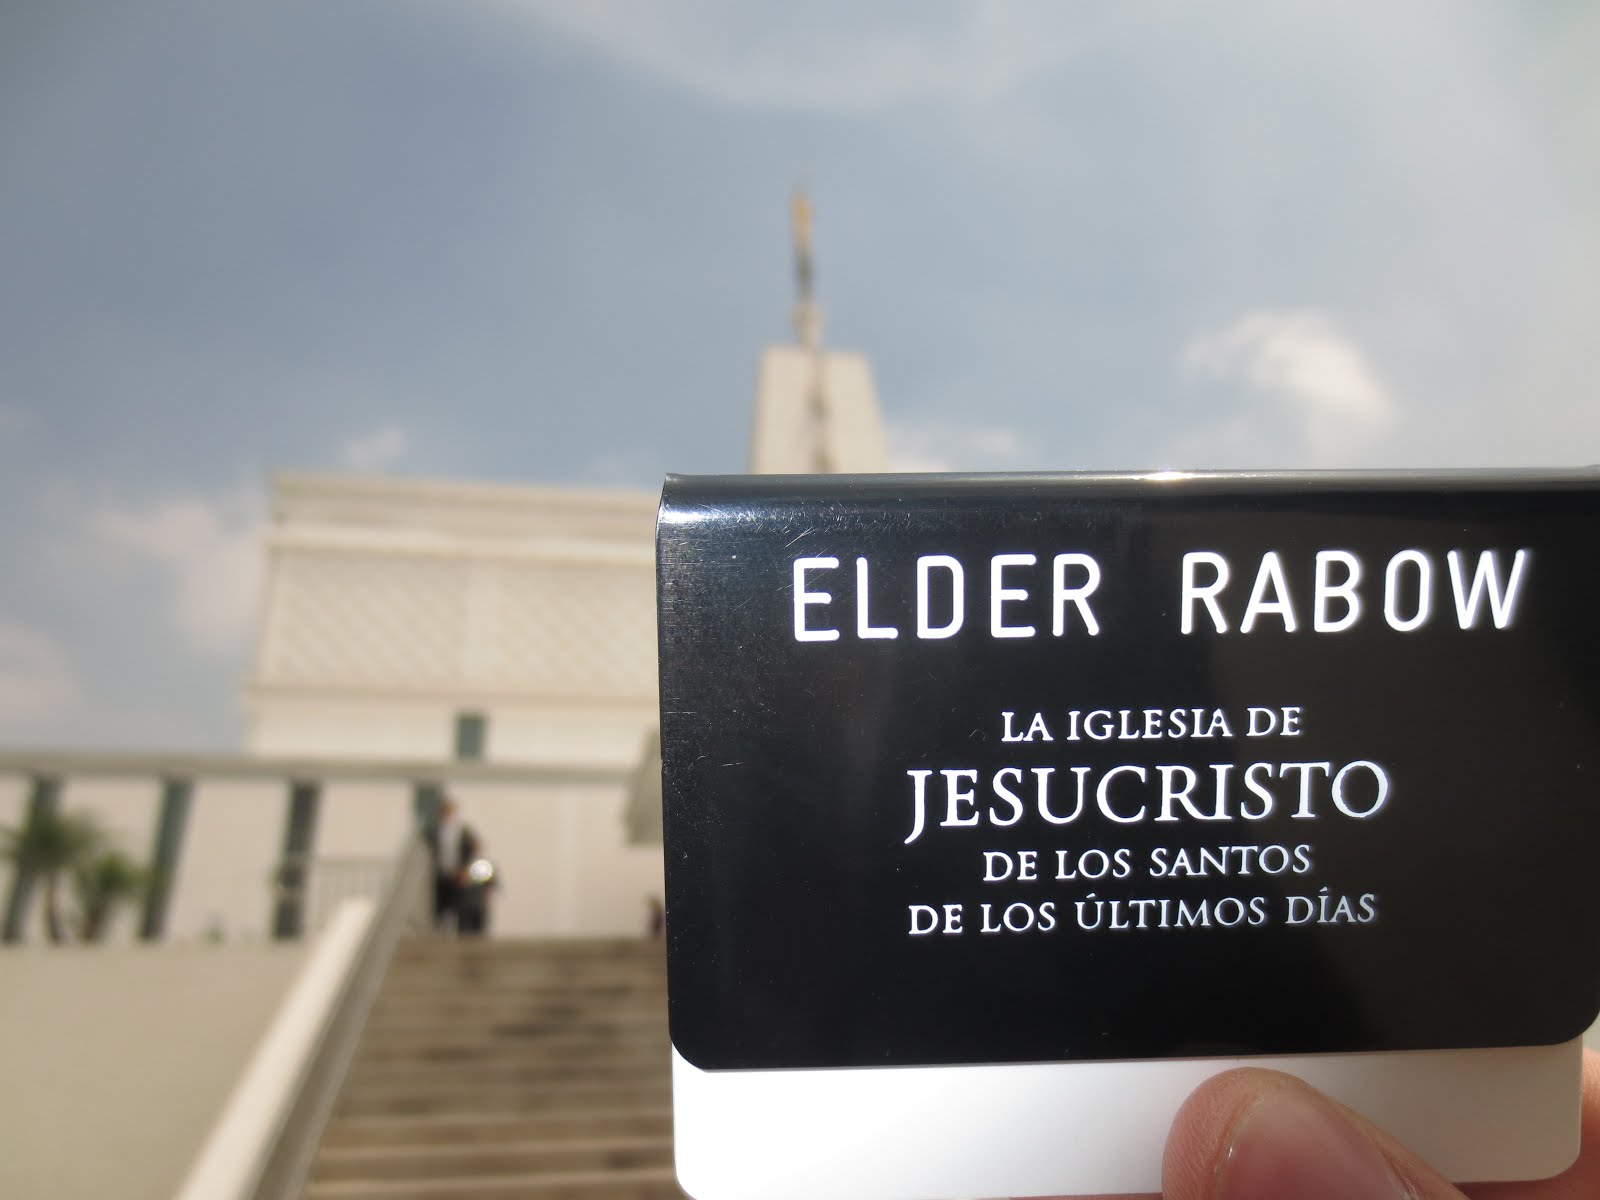 Elder Rabow